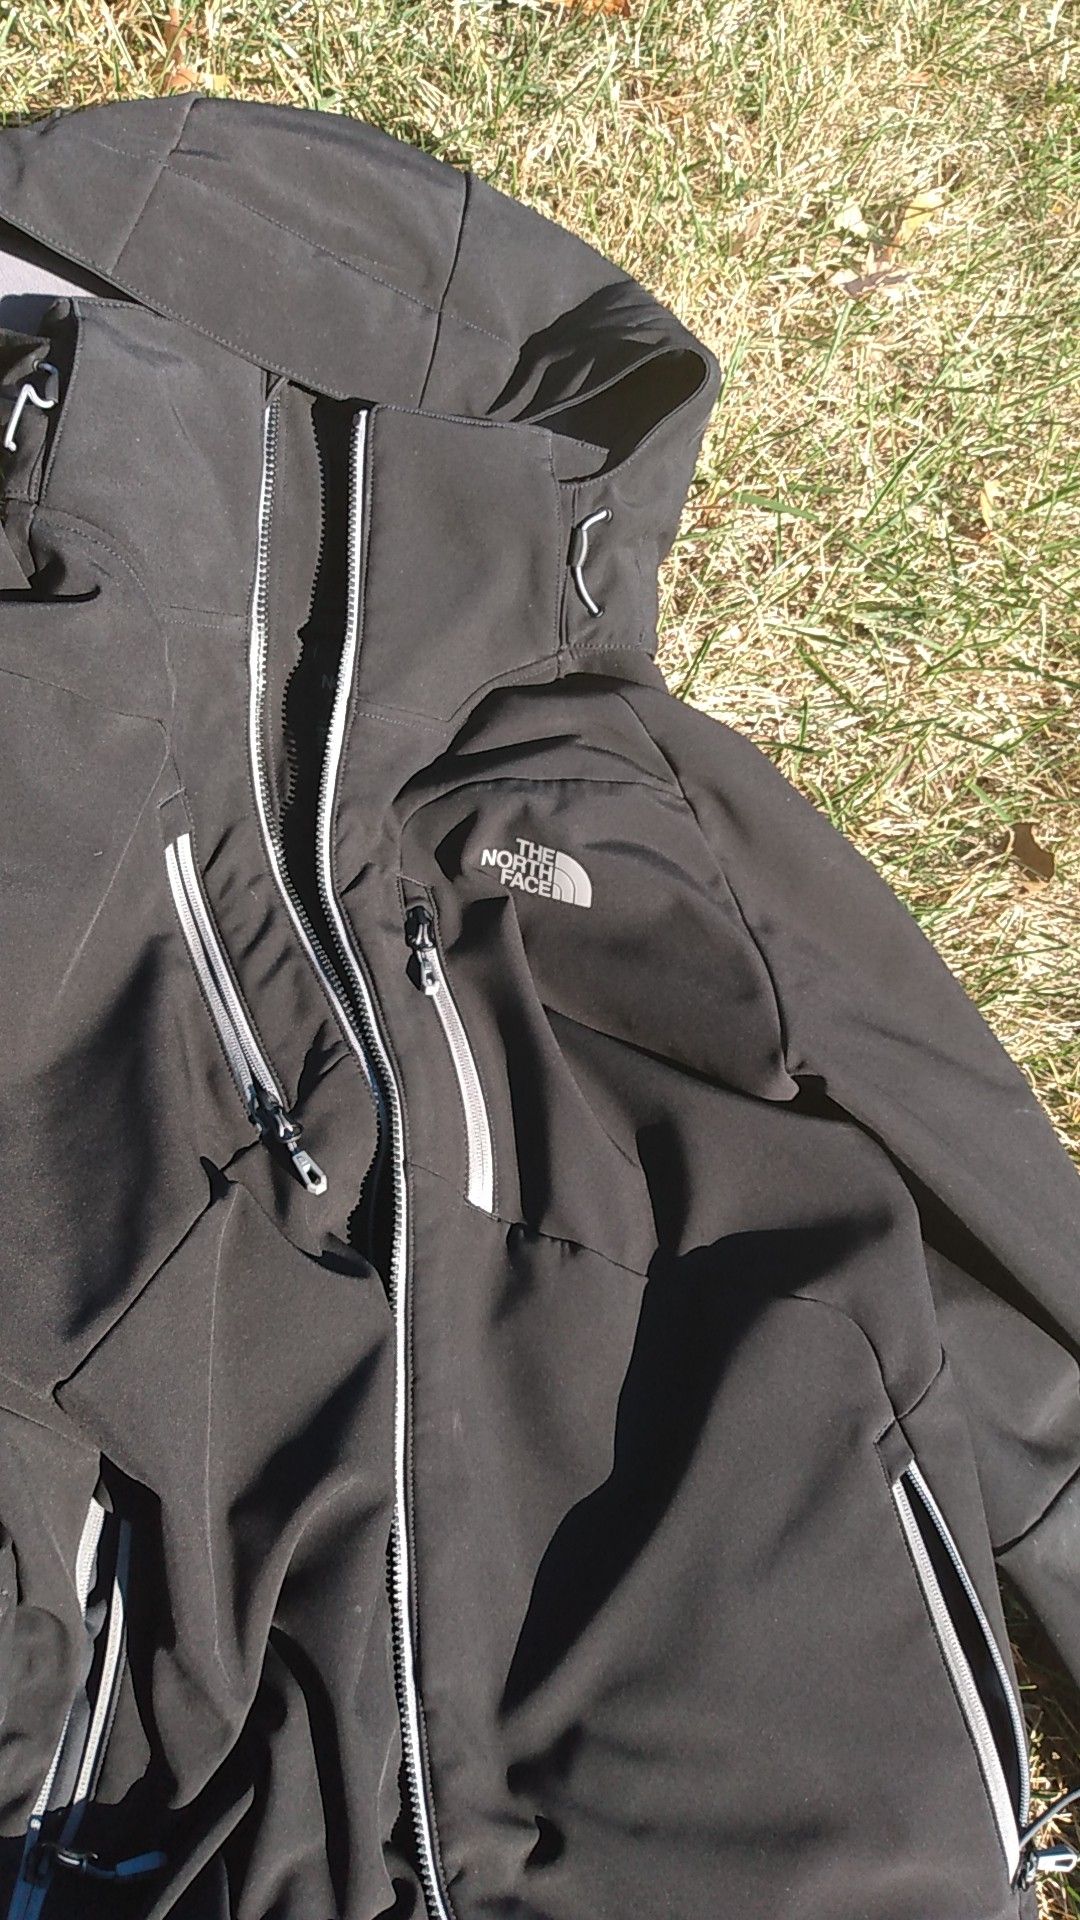 Northface jacket windbreaker and hoodie for sale $180 negotiable hmu